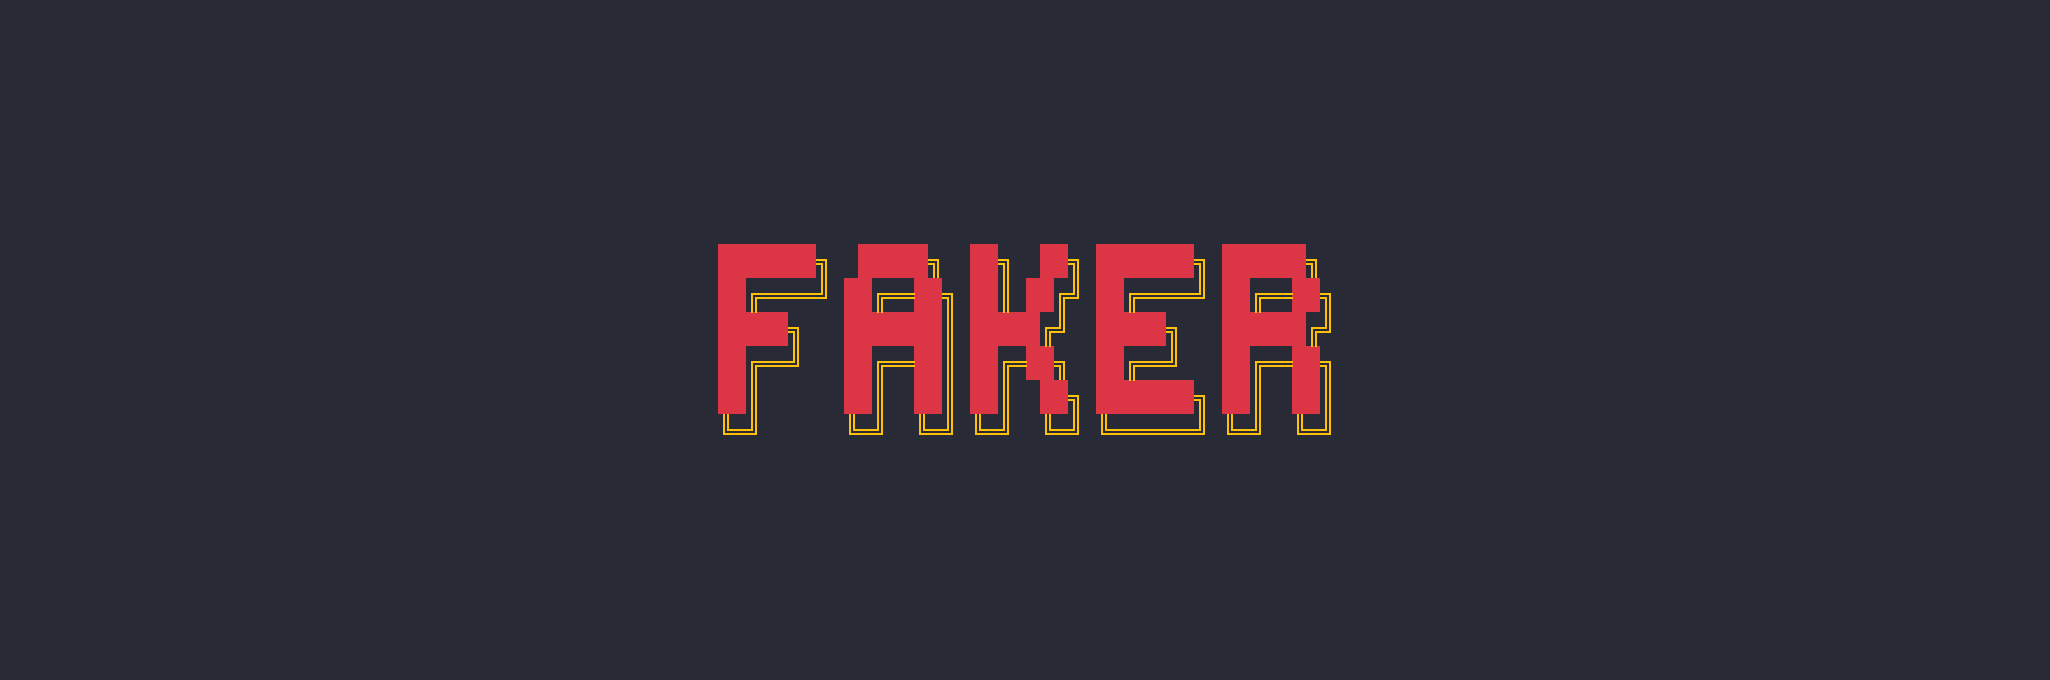 npm:@fakerjs/faker | Skypack